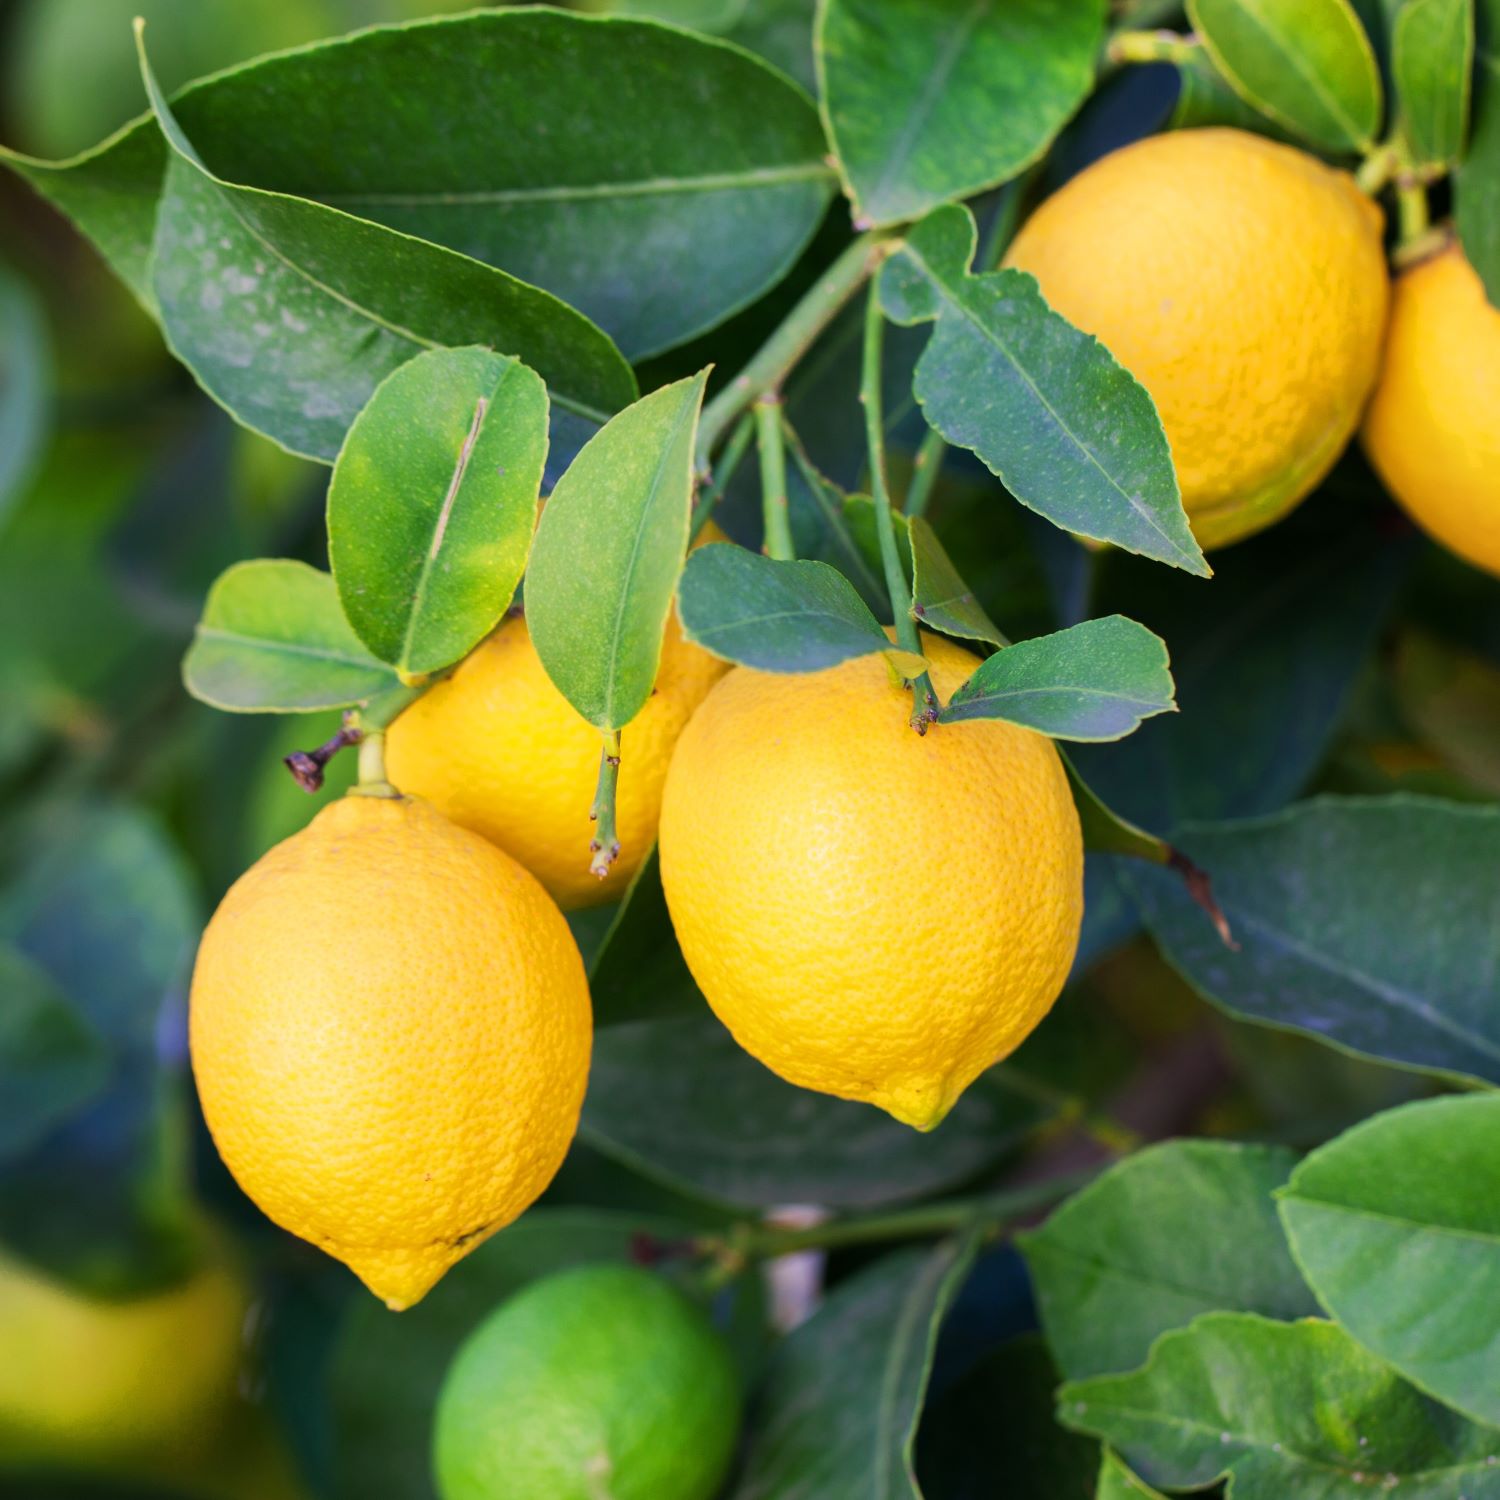 citrus buying guide, organic vs regular citrus